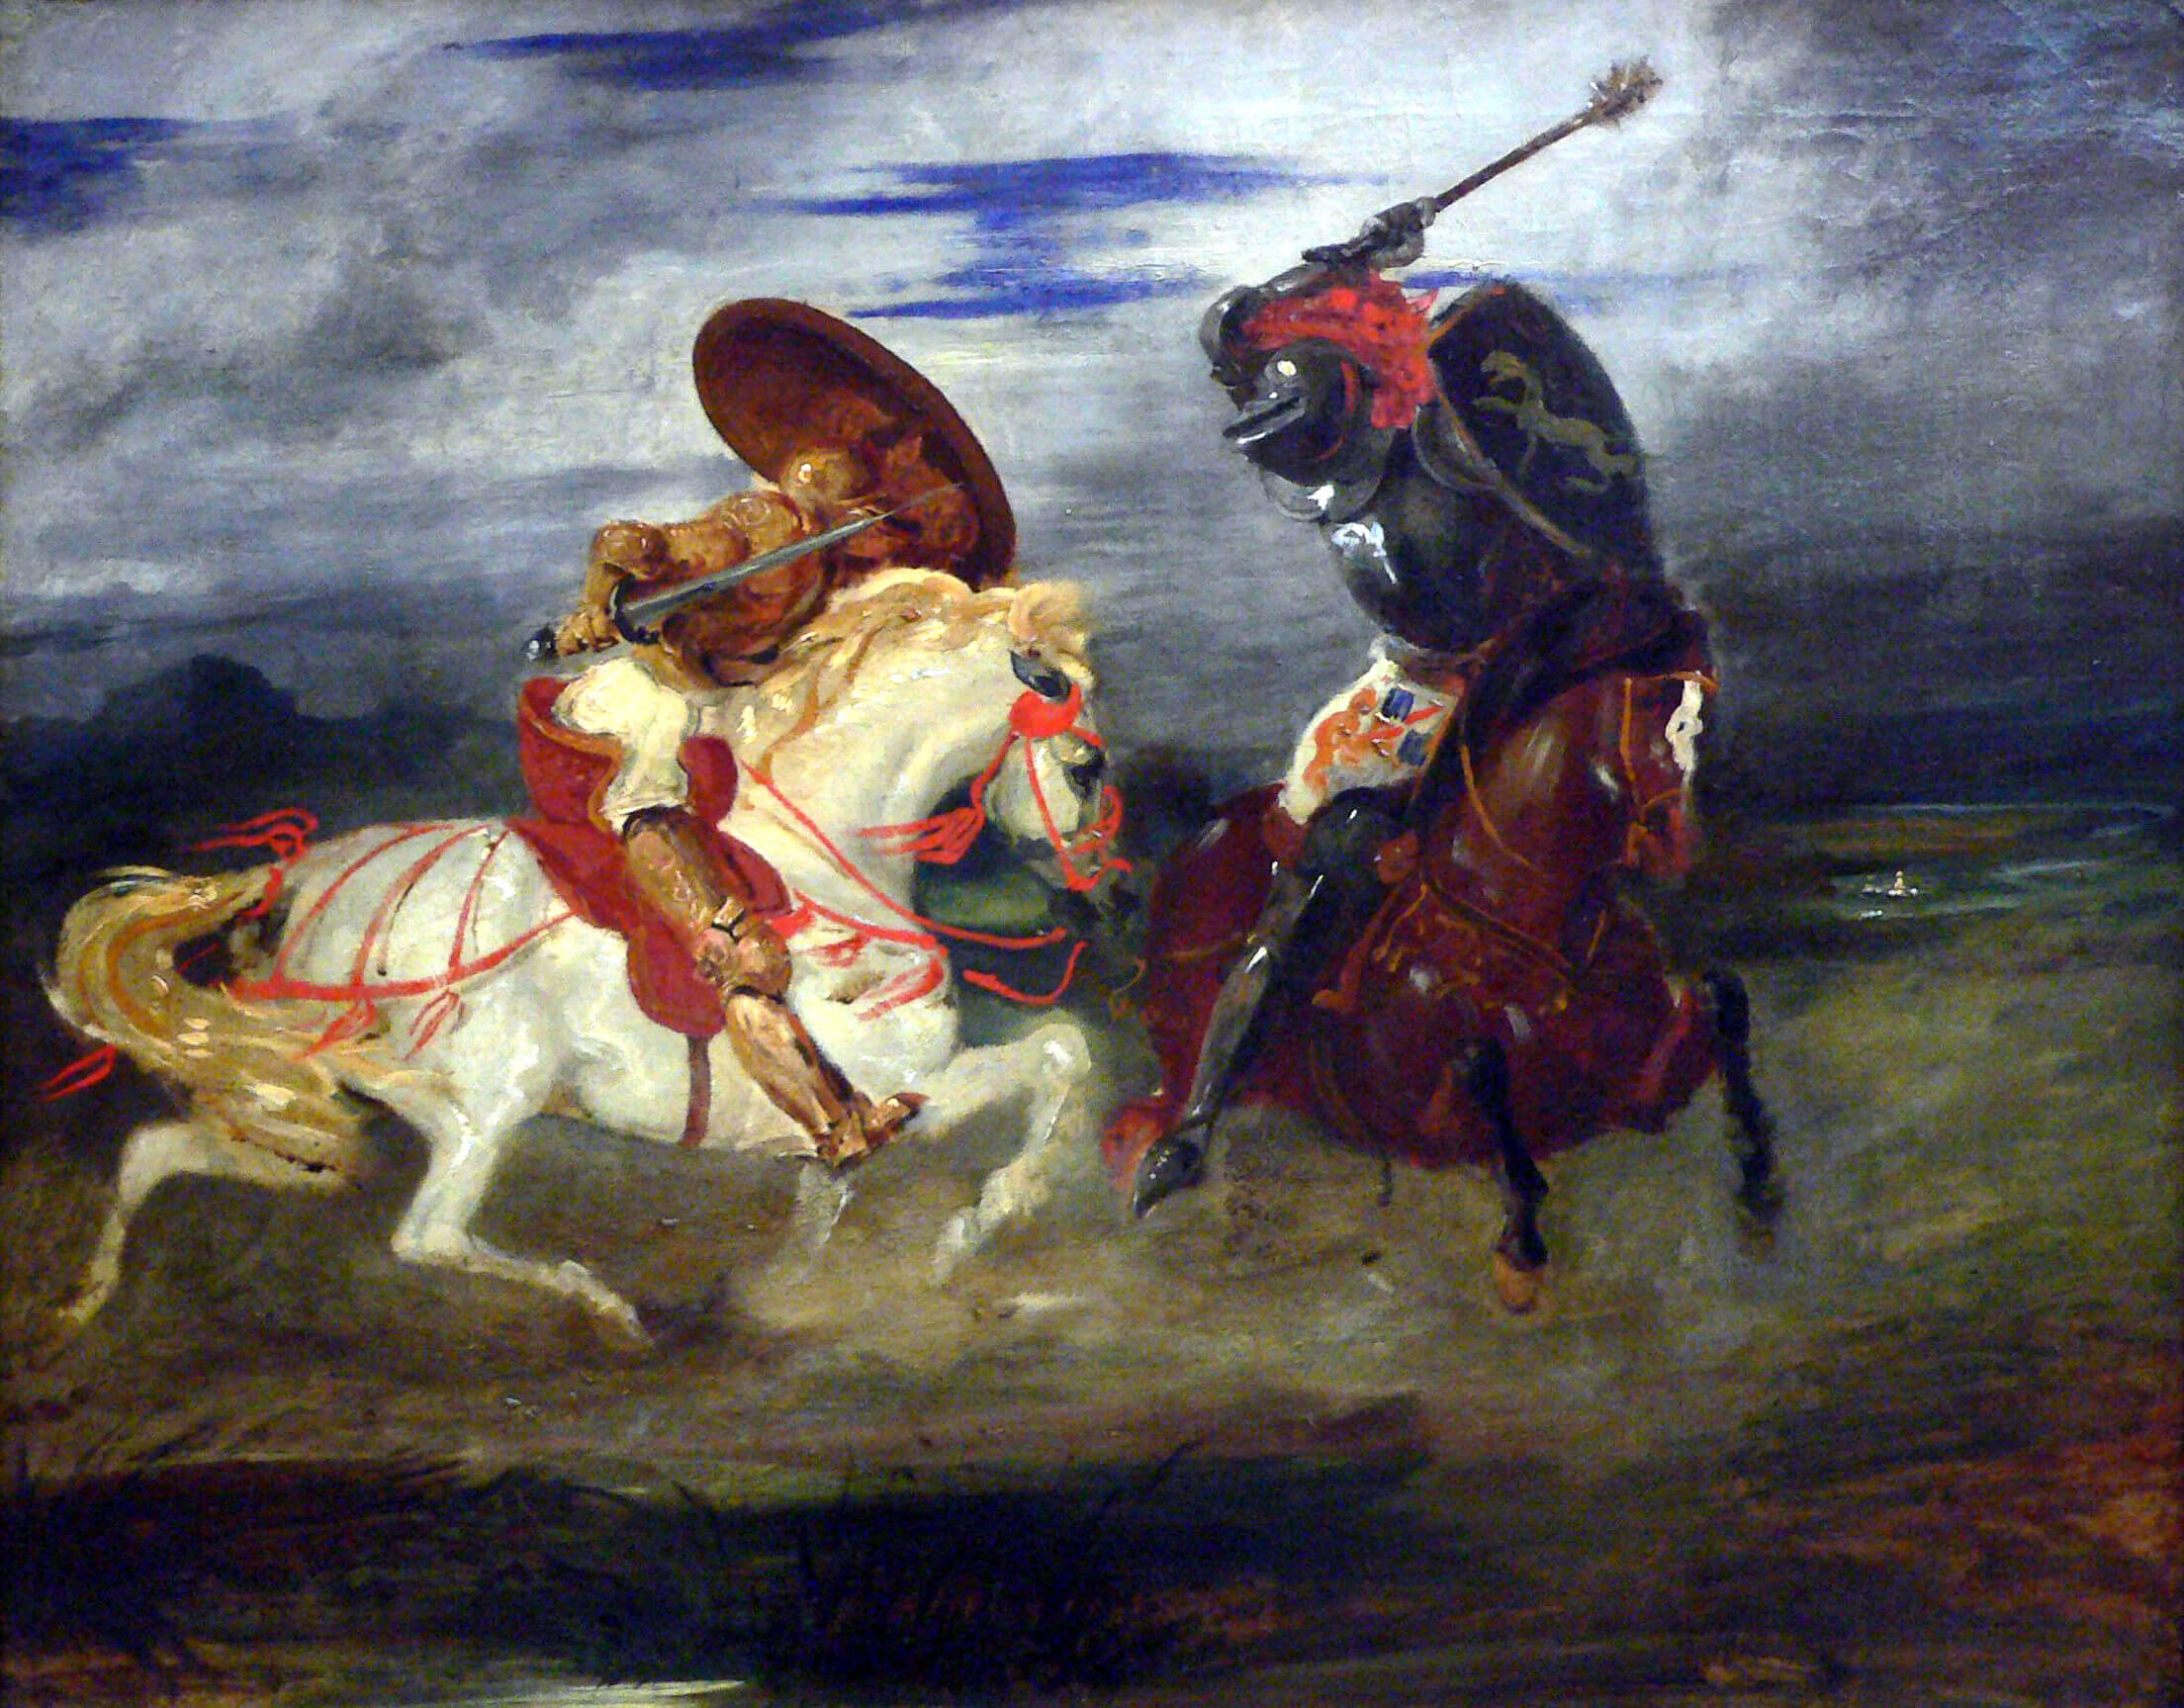 Duel of knights, Combat de chevaliers dans la campagne, painting from 1825 by Agen Delacroix.